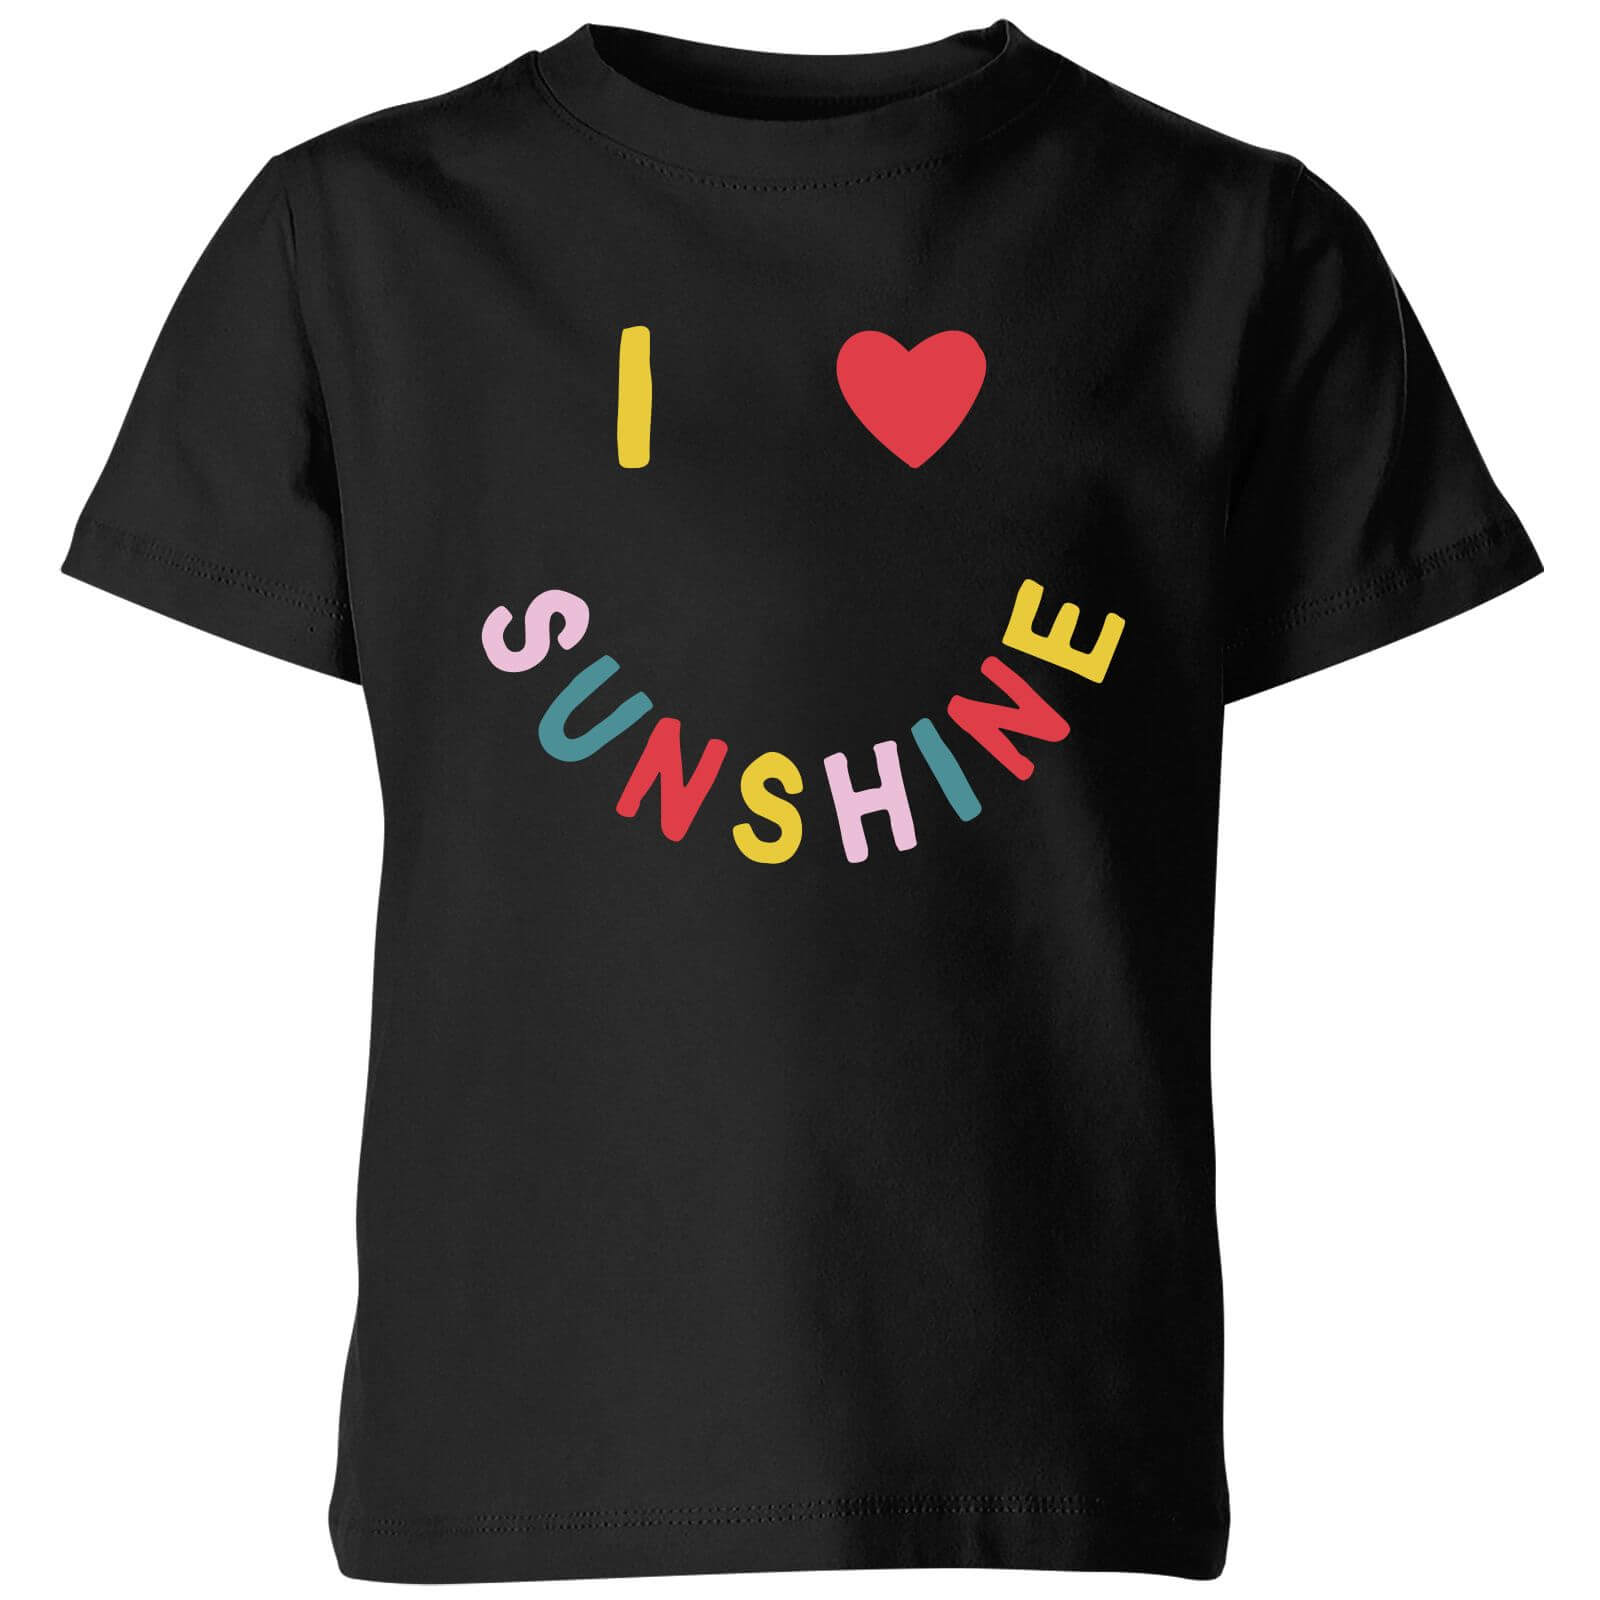 My Little Rascal I Love Sunshine Kids' T-Shirt - Black - 3-4 Years - Black